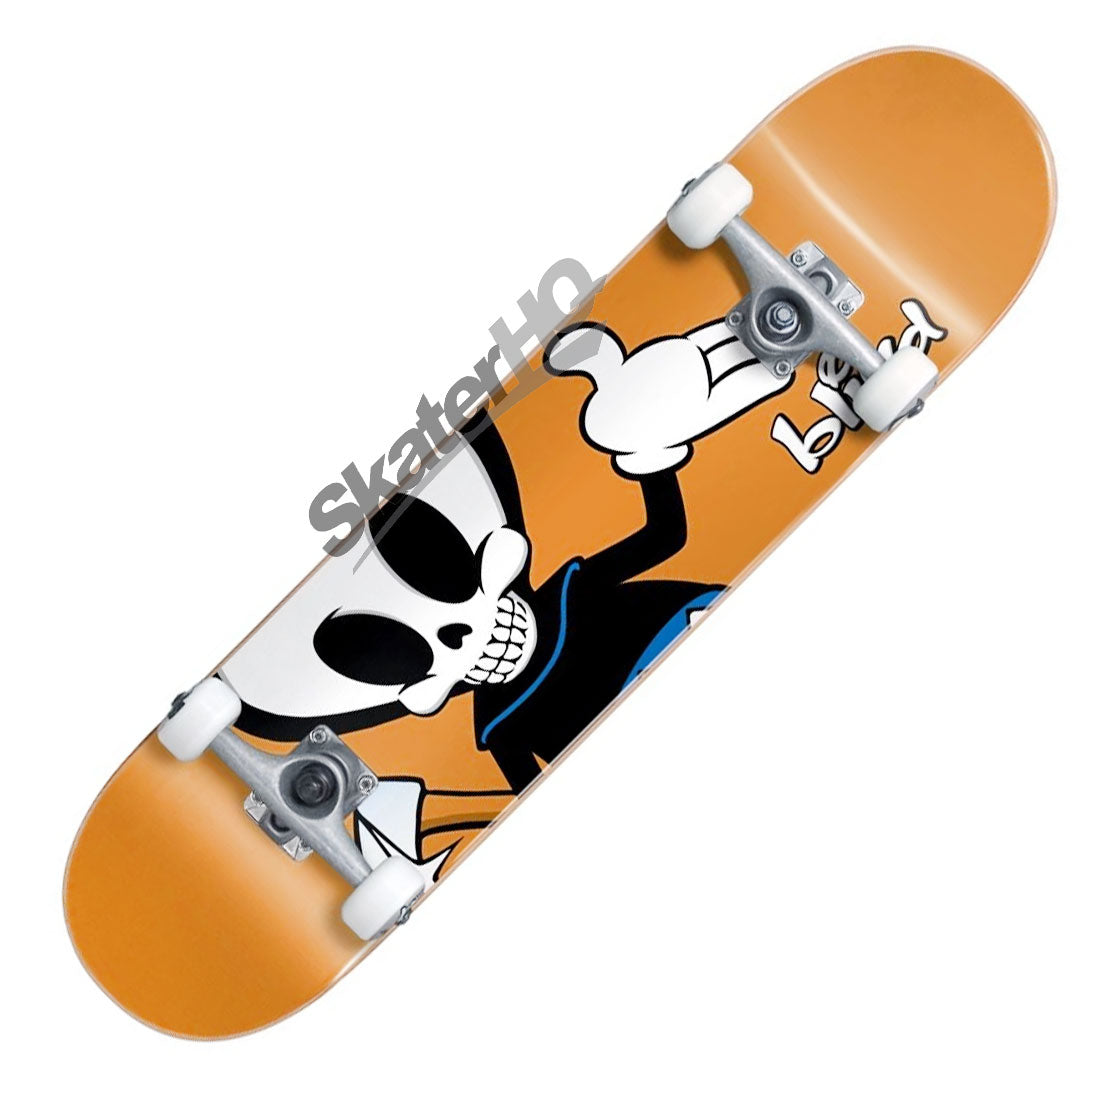 Blind Reaper Character 7.75 Complete - Orange Skateboard Completes Modern Street